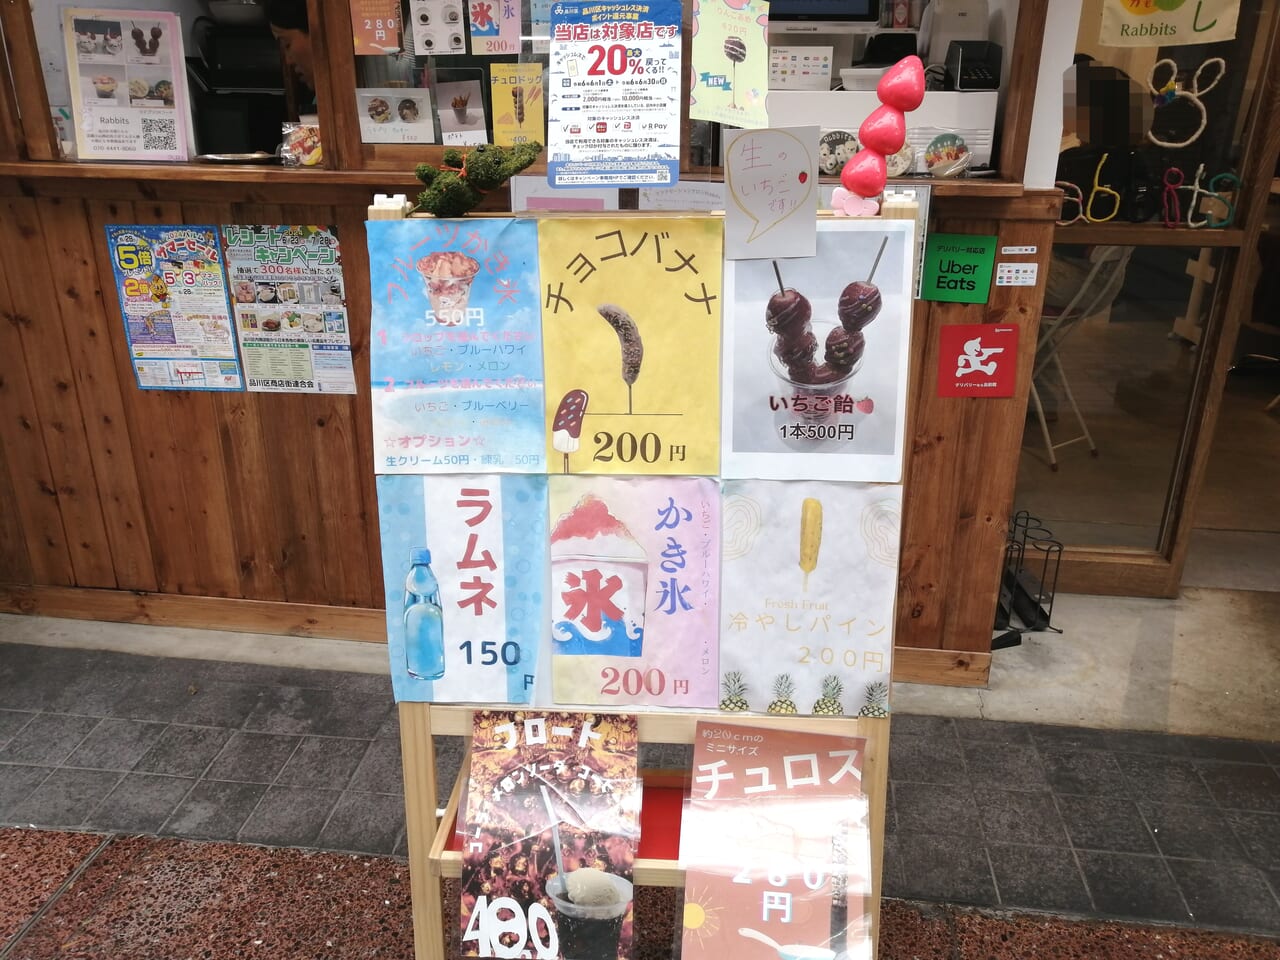 Rabbits 武蔵小山　Cafe&ラテプリ